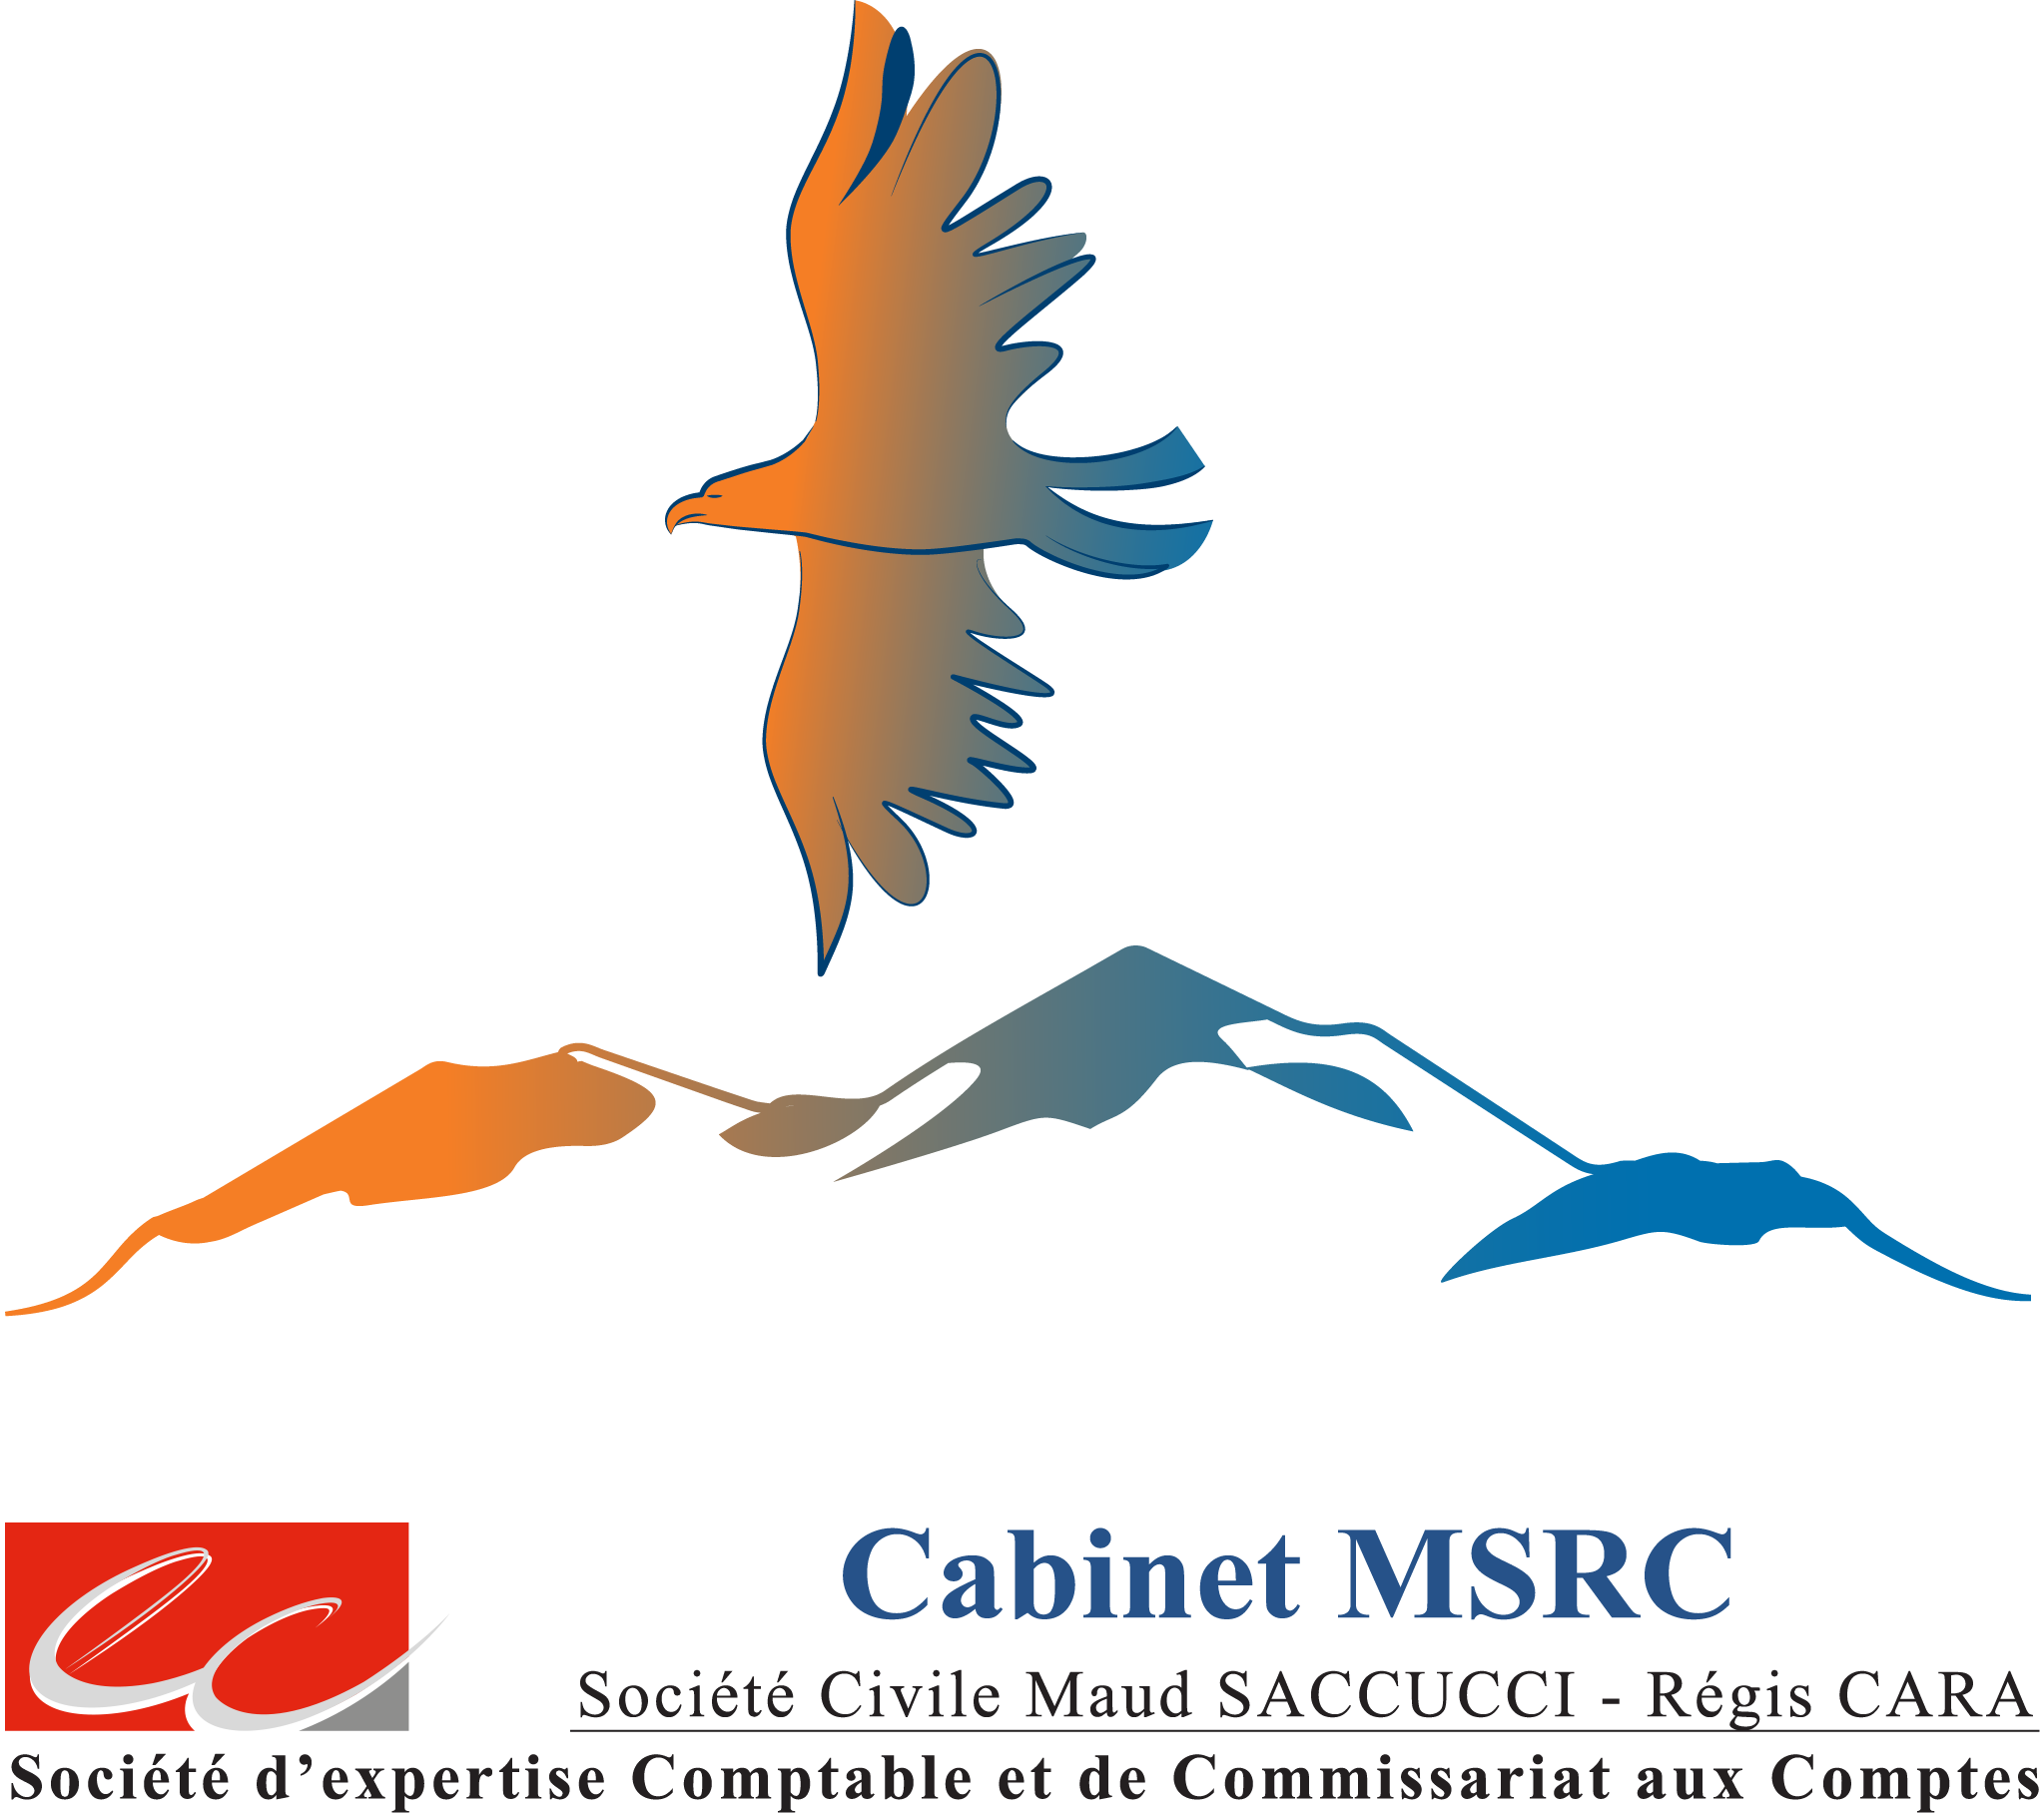 Cabinet MSRC